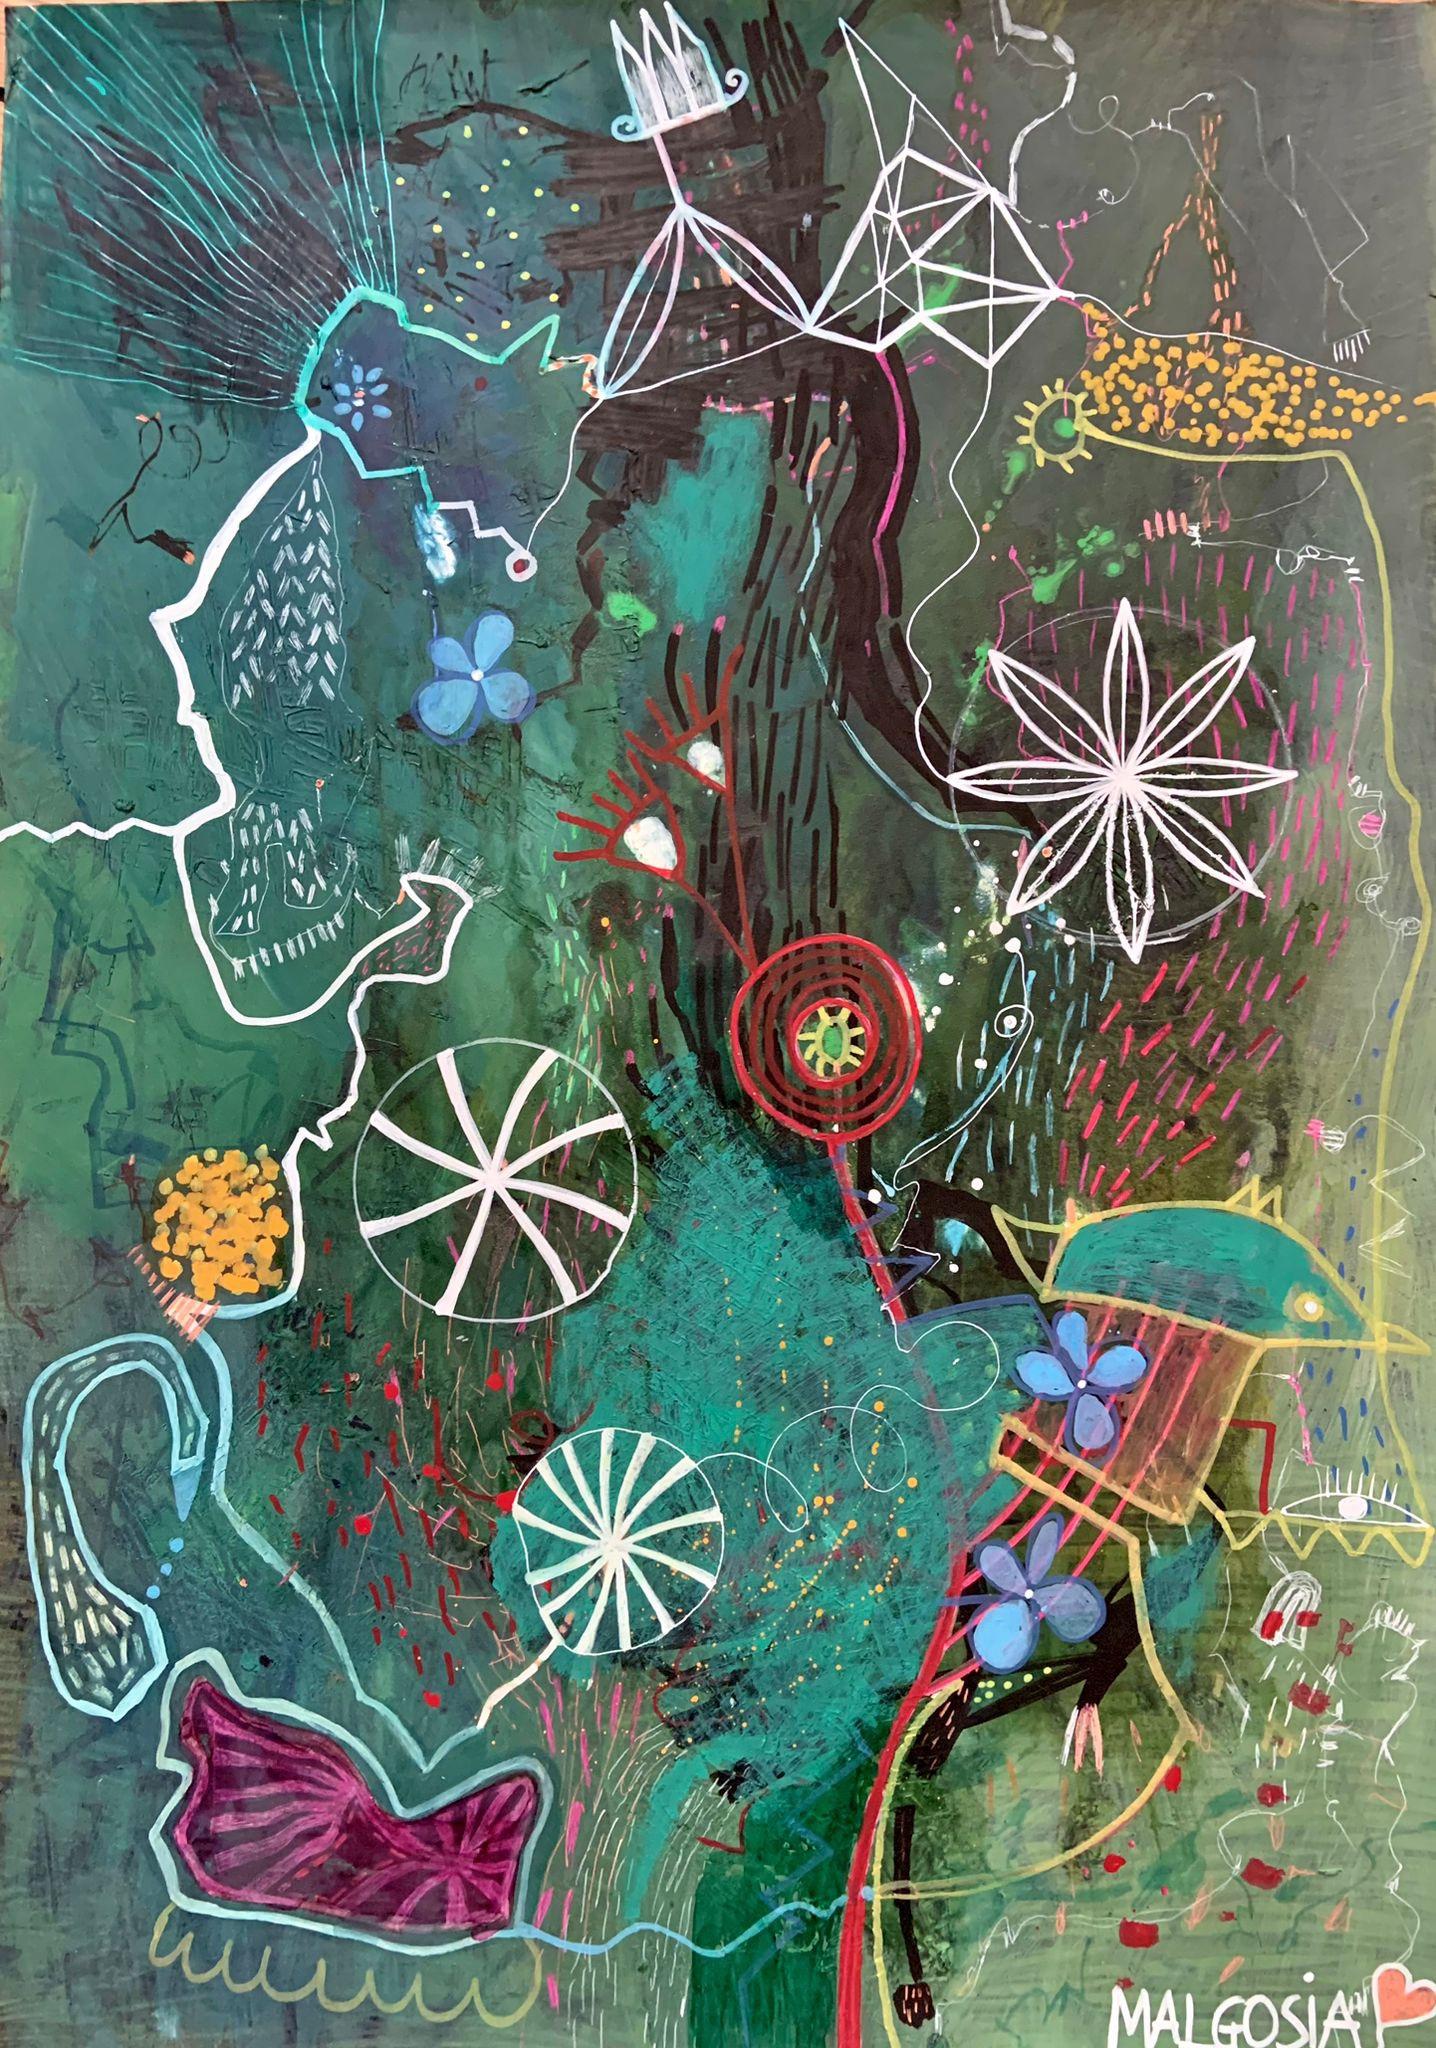 Dimond Carpet Green Abstract on Paper - Mixed Media Art by Malgosia Kiernozycka